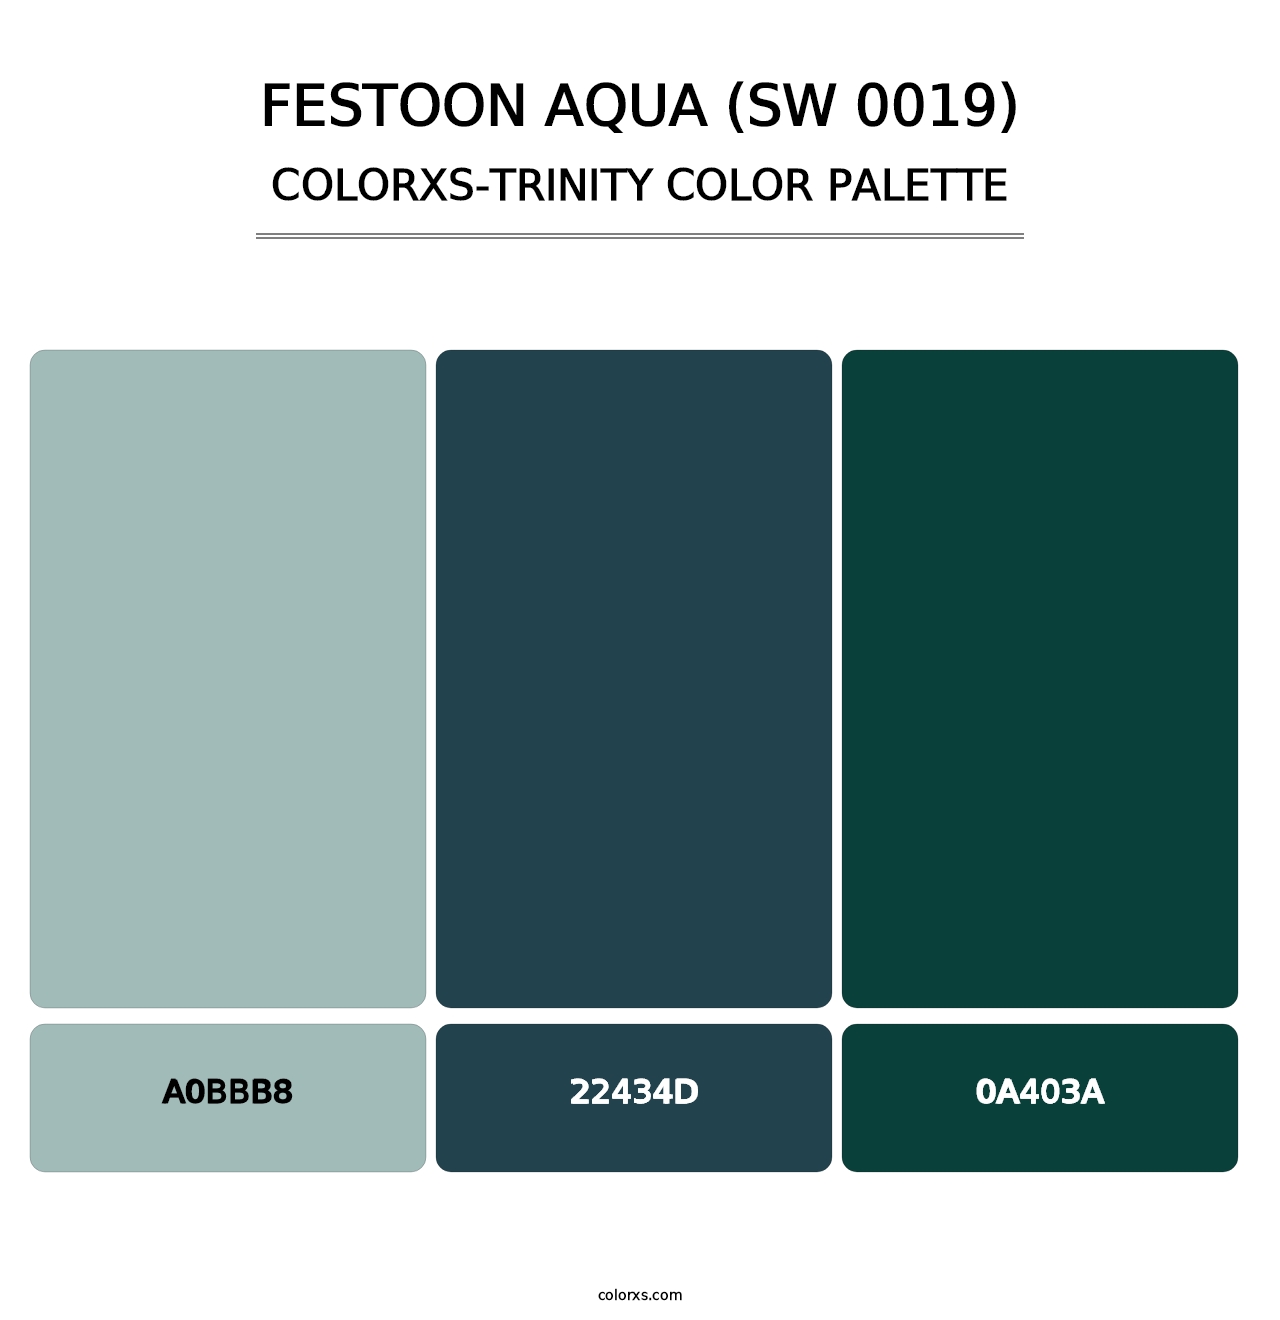 Festoon Aqua (SW 0019) - Colorxs Trinity Palette